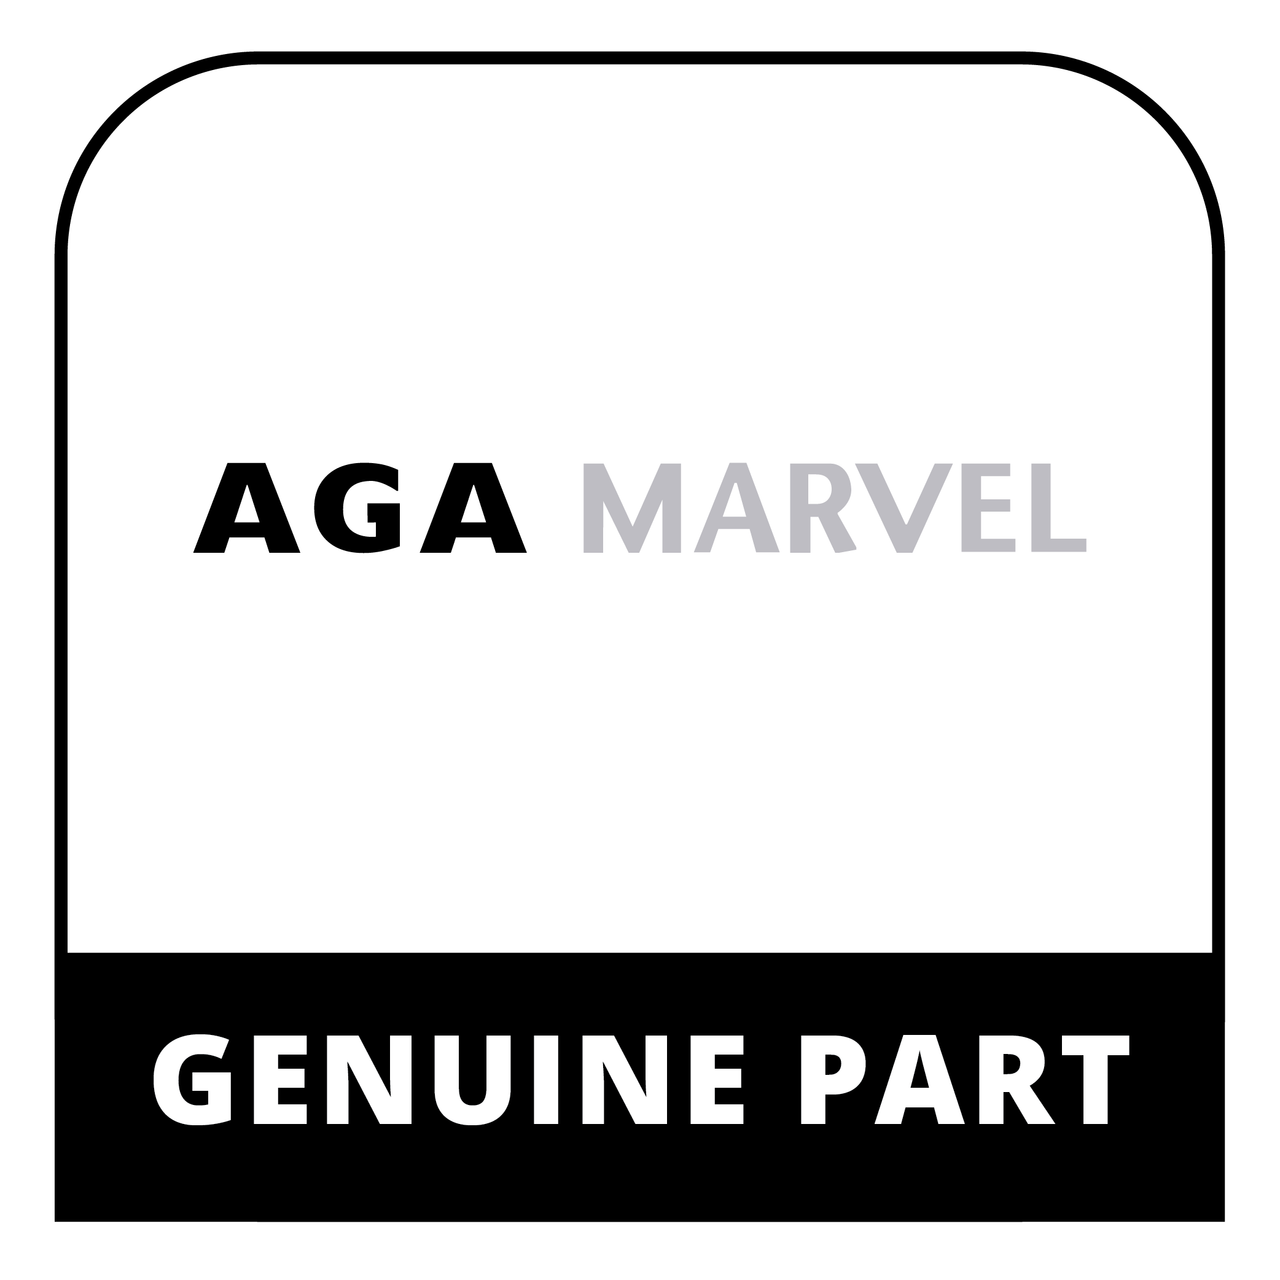 AGA Marvel RS4F999070 - Firebrick (No.339) Lho Rsg - Genuine AGA Marvel Part